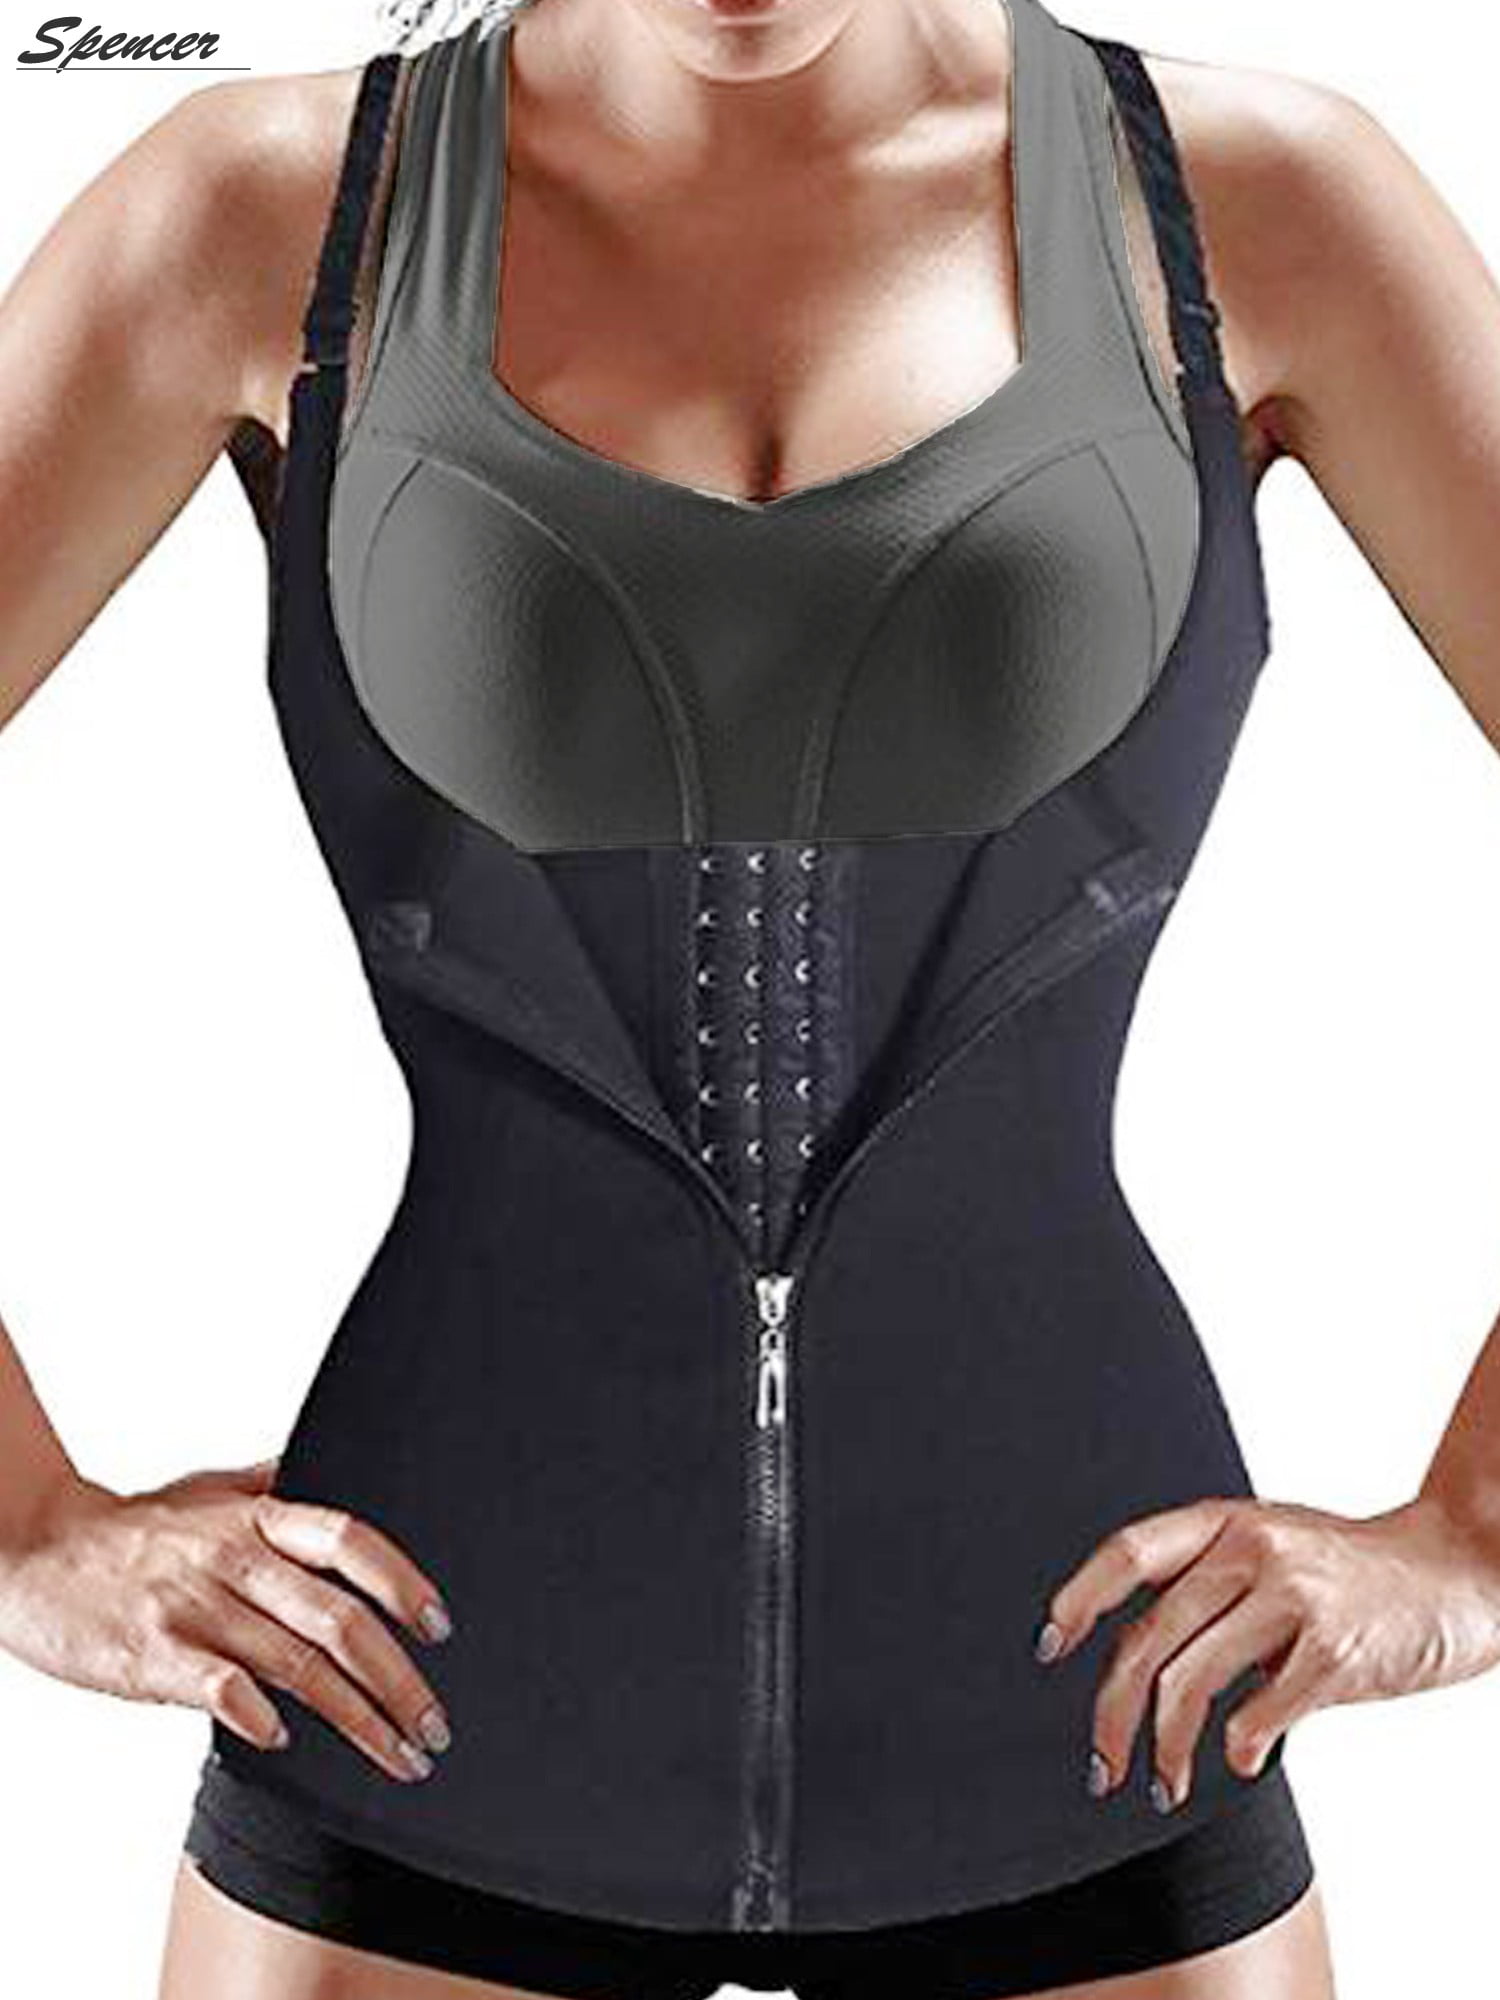 Size XXL Black Womens Vest Style Latex Underbust Corset Waist Trainer Cincher Body Shaper Shapewear